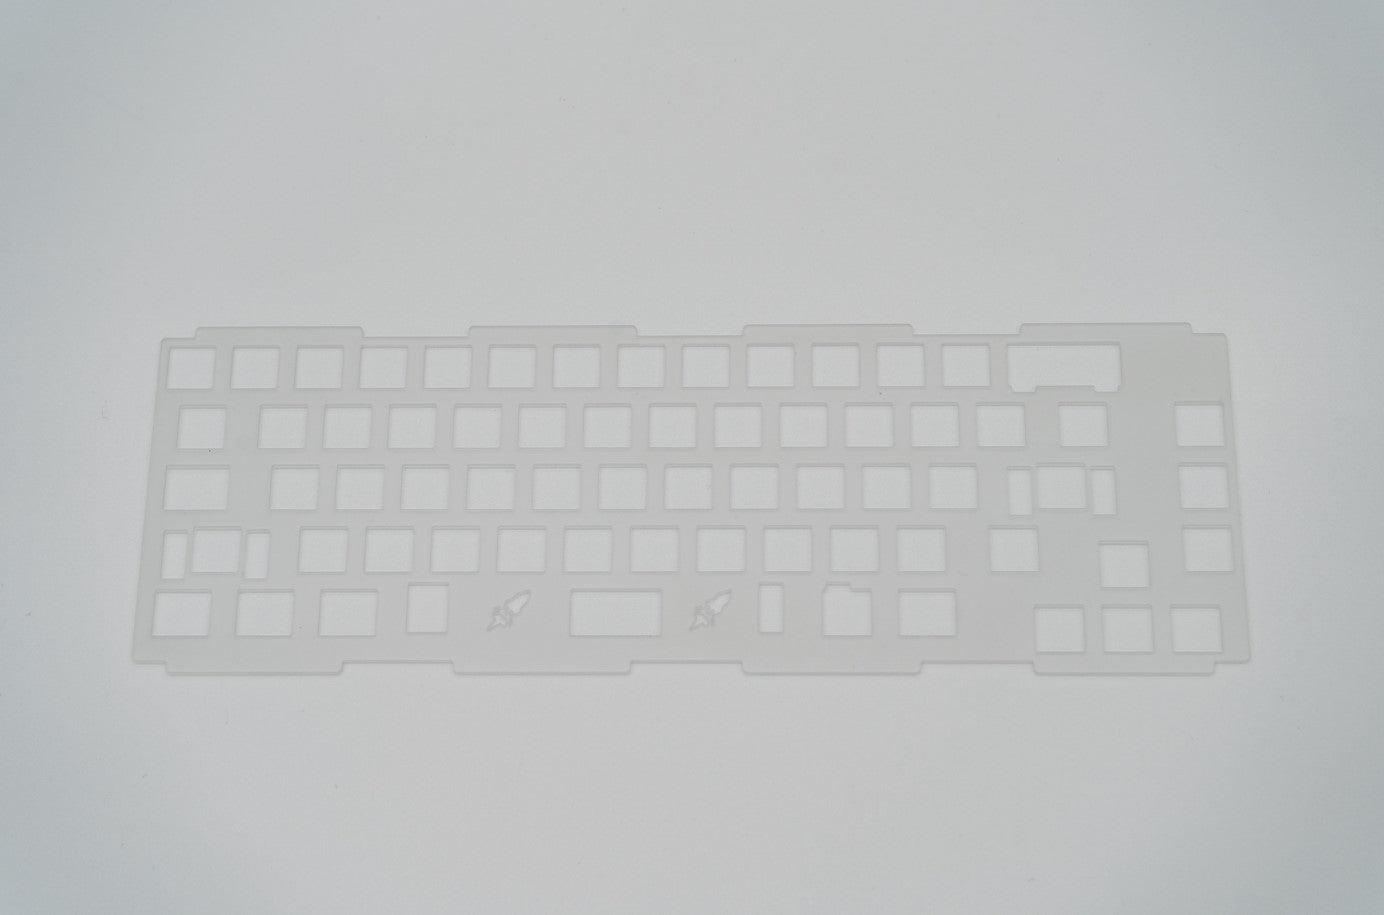 [In Stock] Mercury65 Keyboard Add-ons